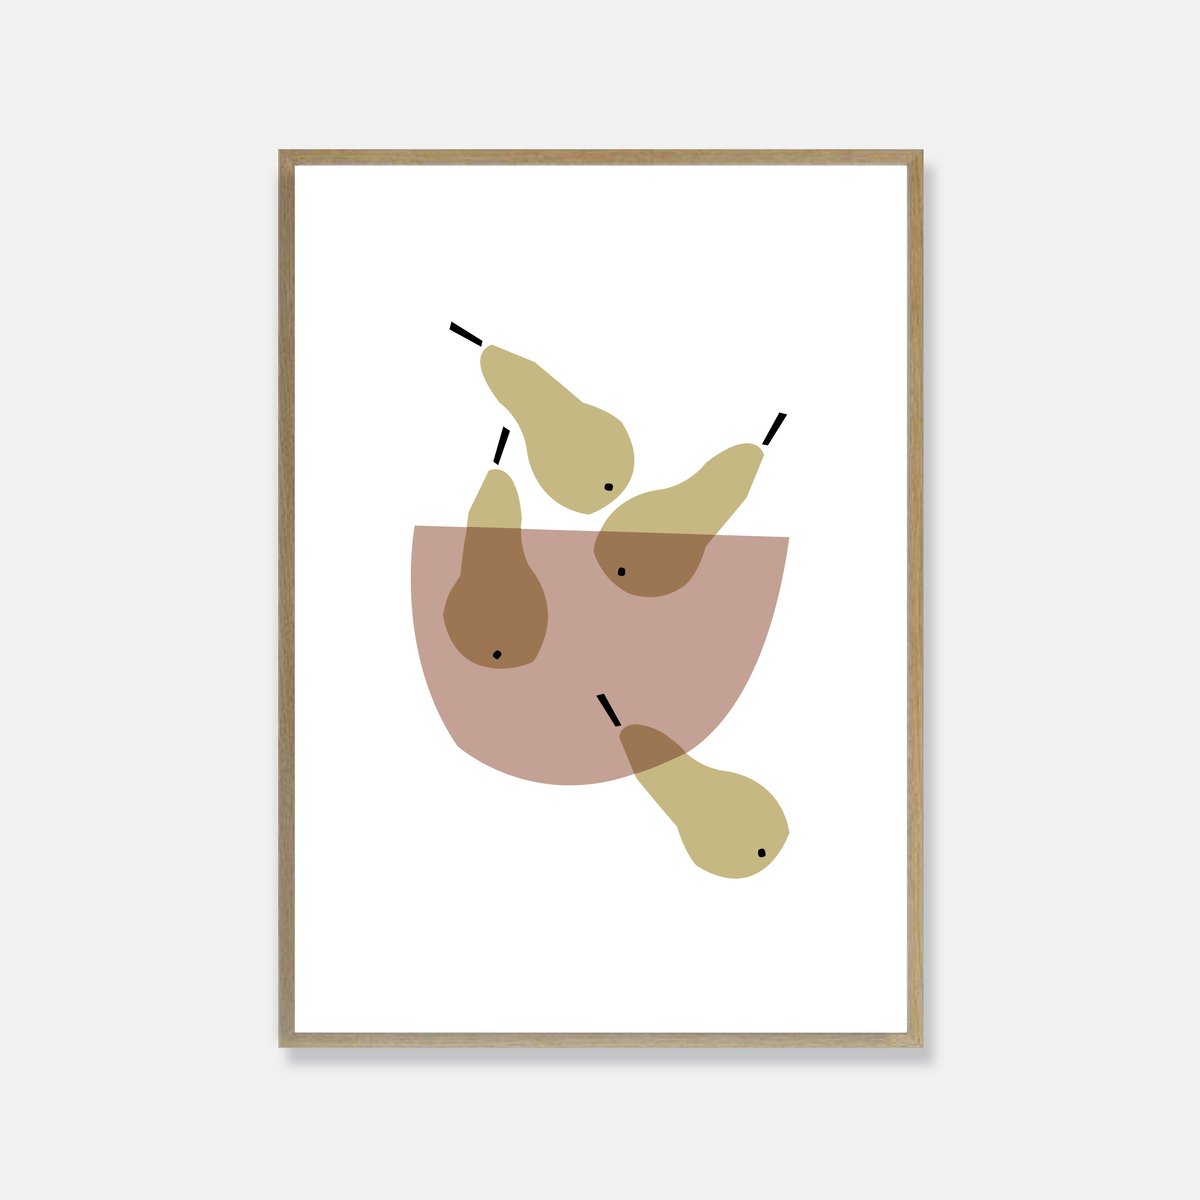 Image of Pears Print